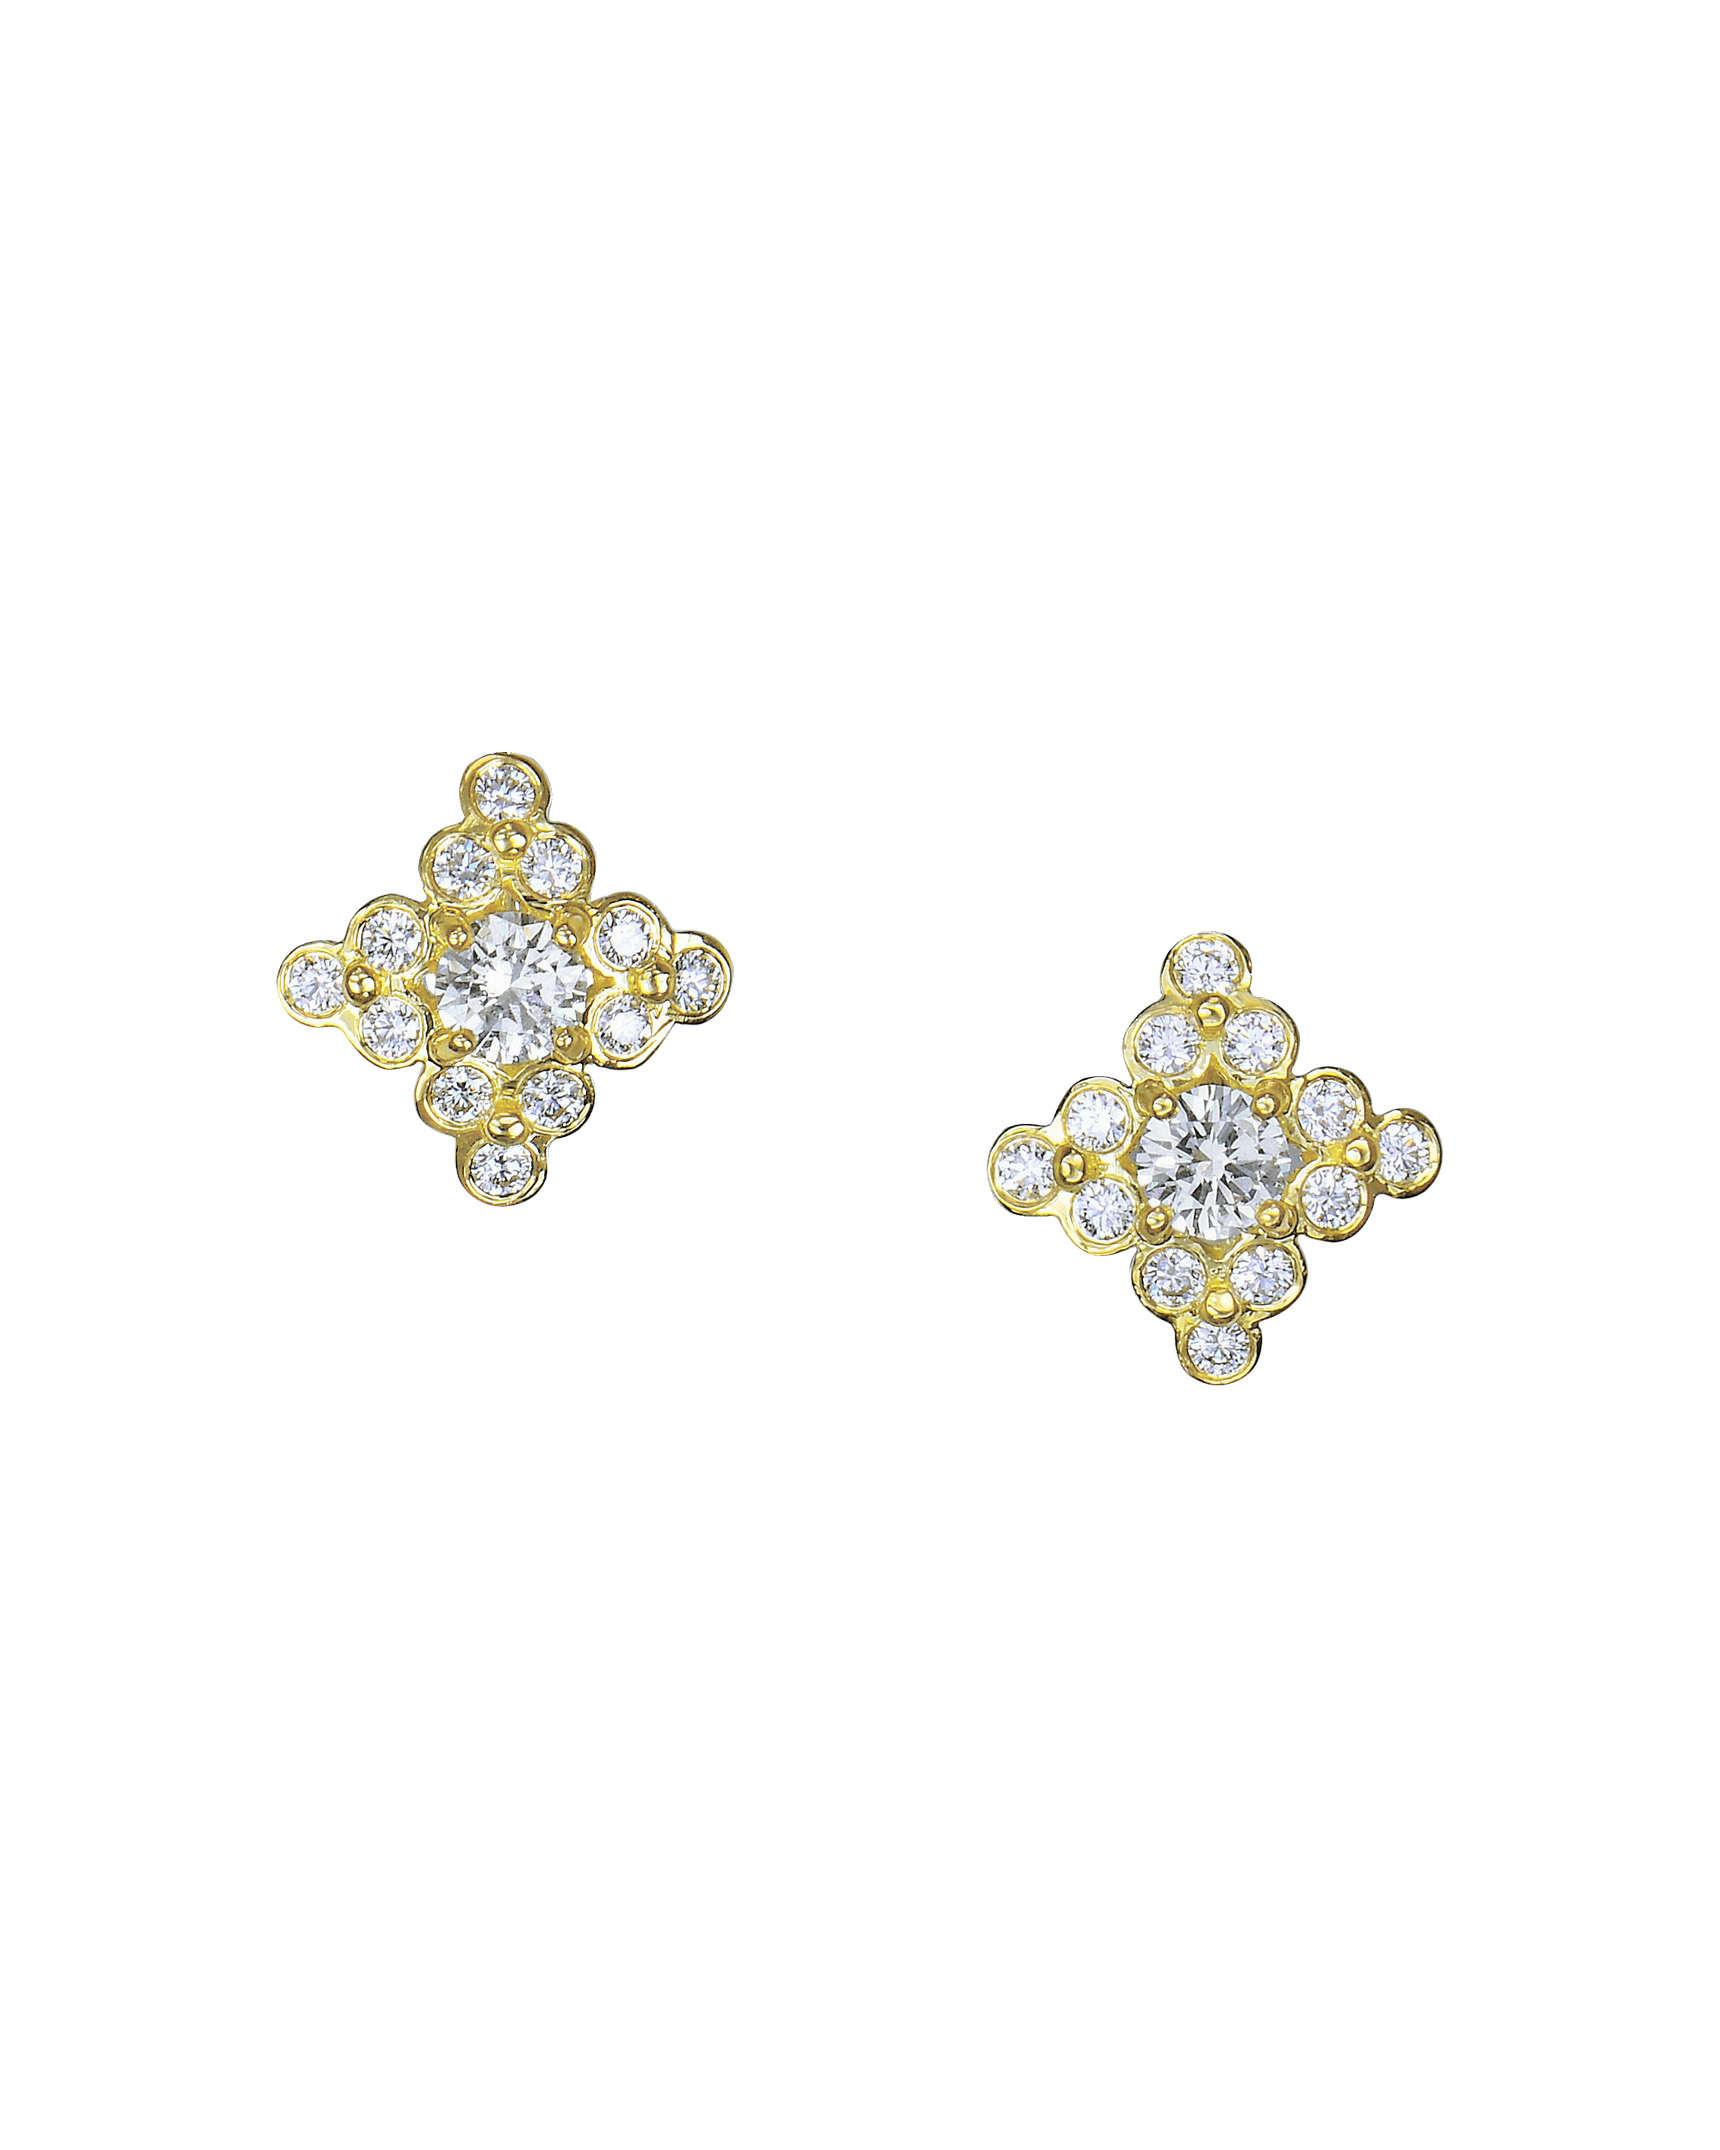 Twinkle twinkle , sparkling diamond look alike earrings We ship #worldwide  . To place an order Whatsapp / call : +91 90941 38036 Ema... | Instagram